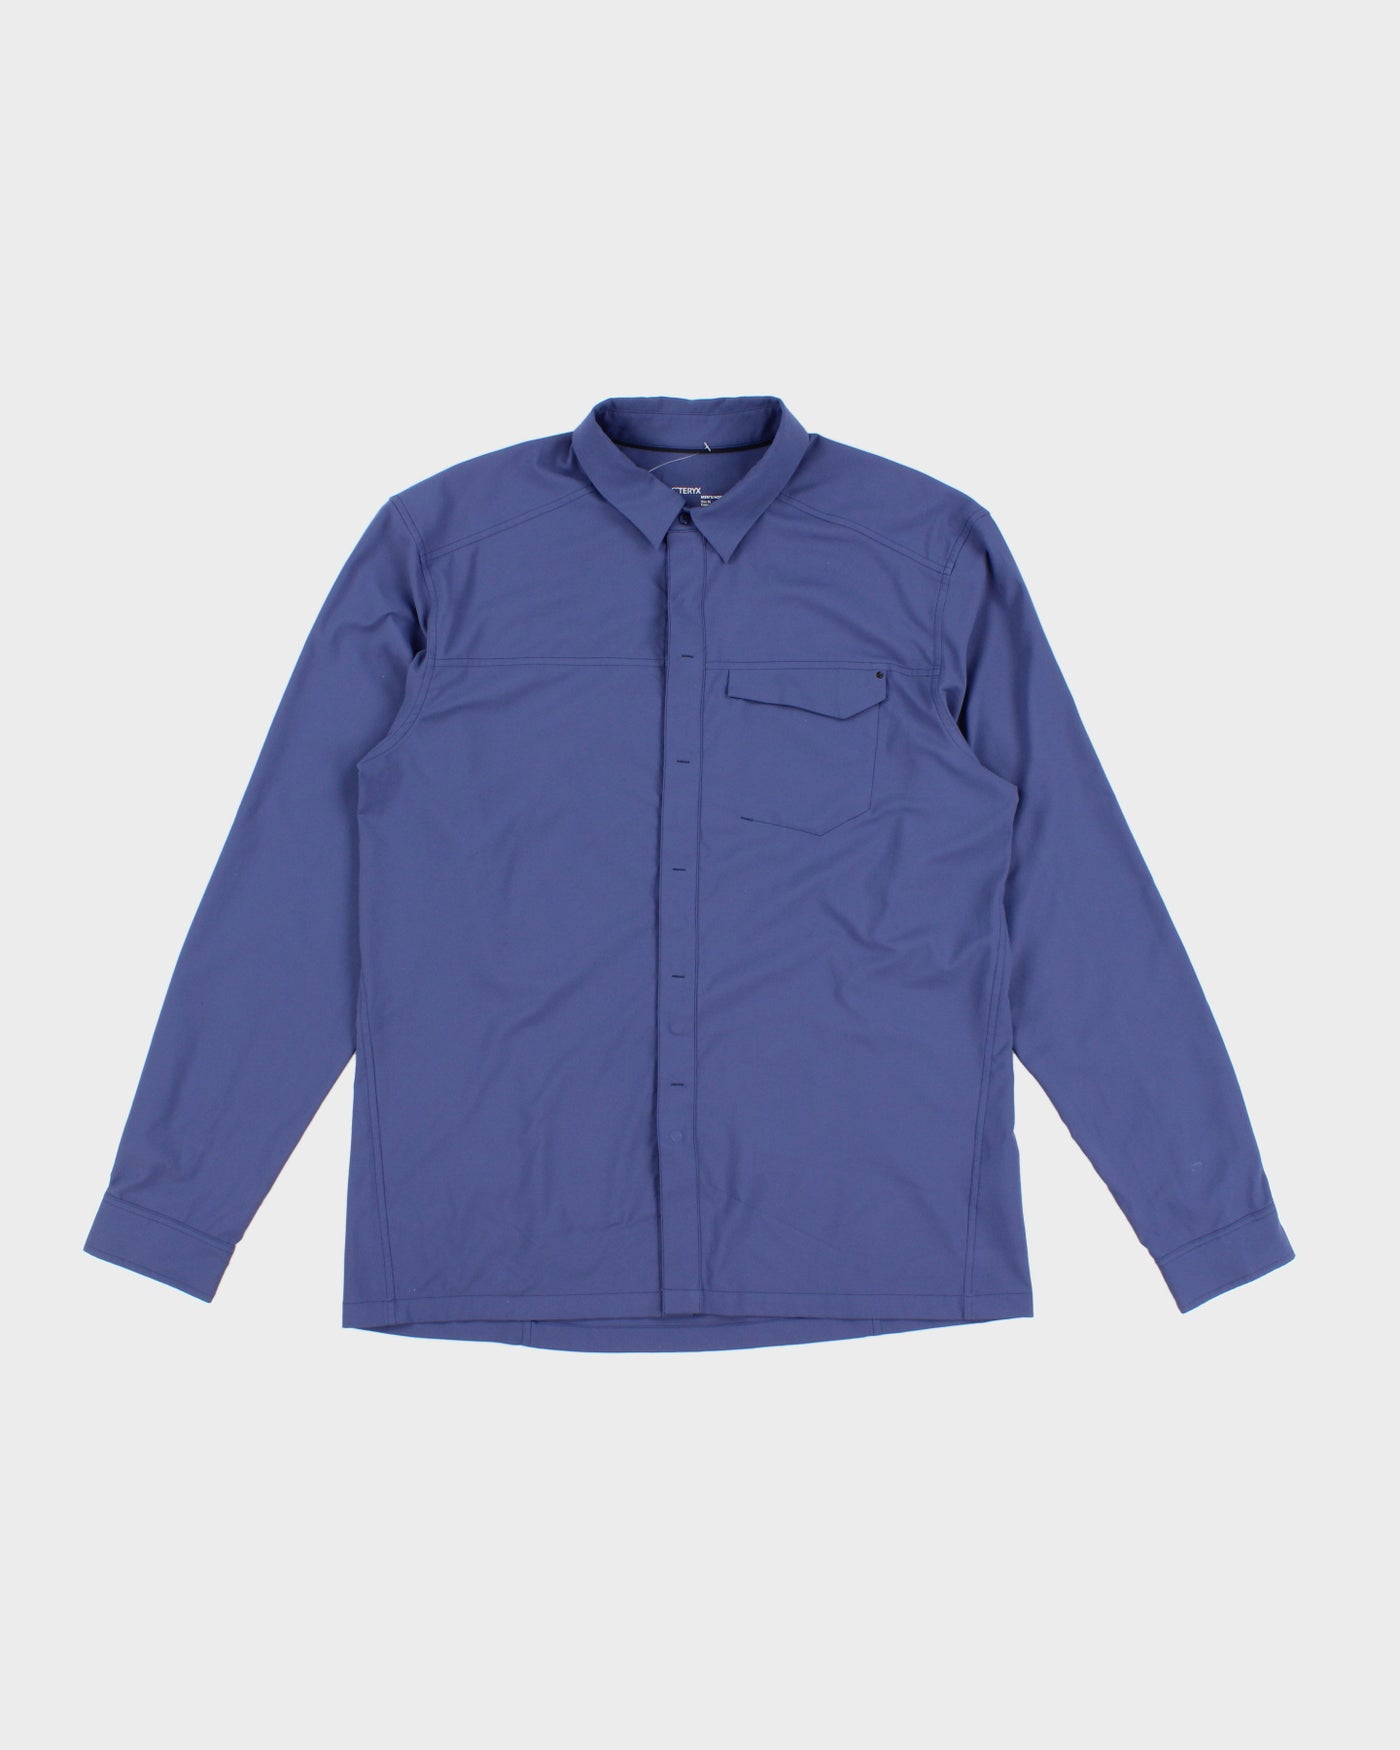 Arc'teryx Men's Blue Utility Shirt - L